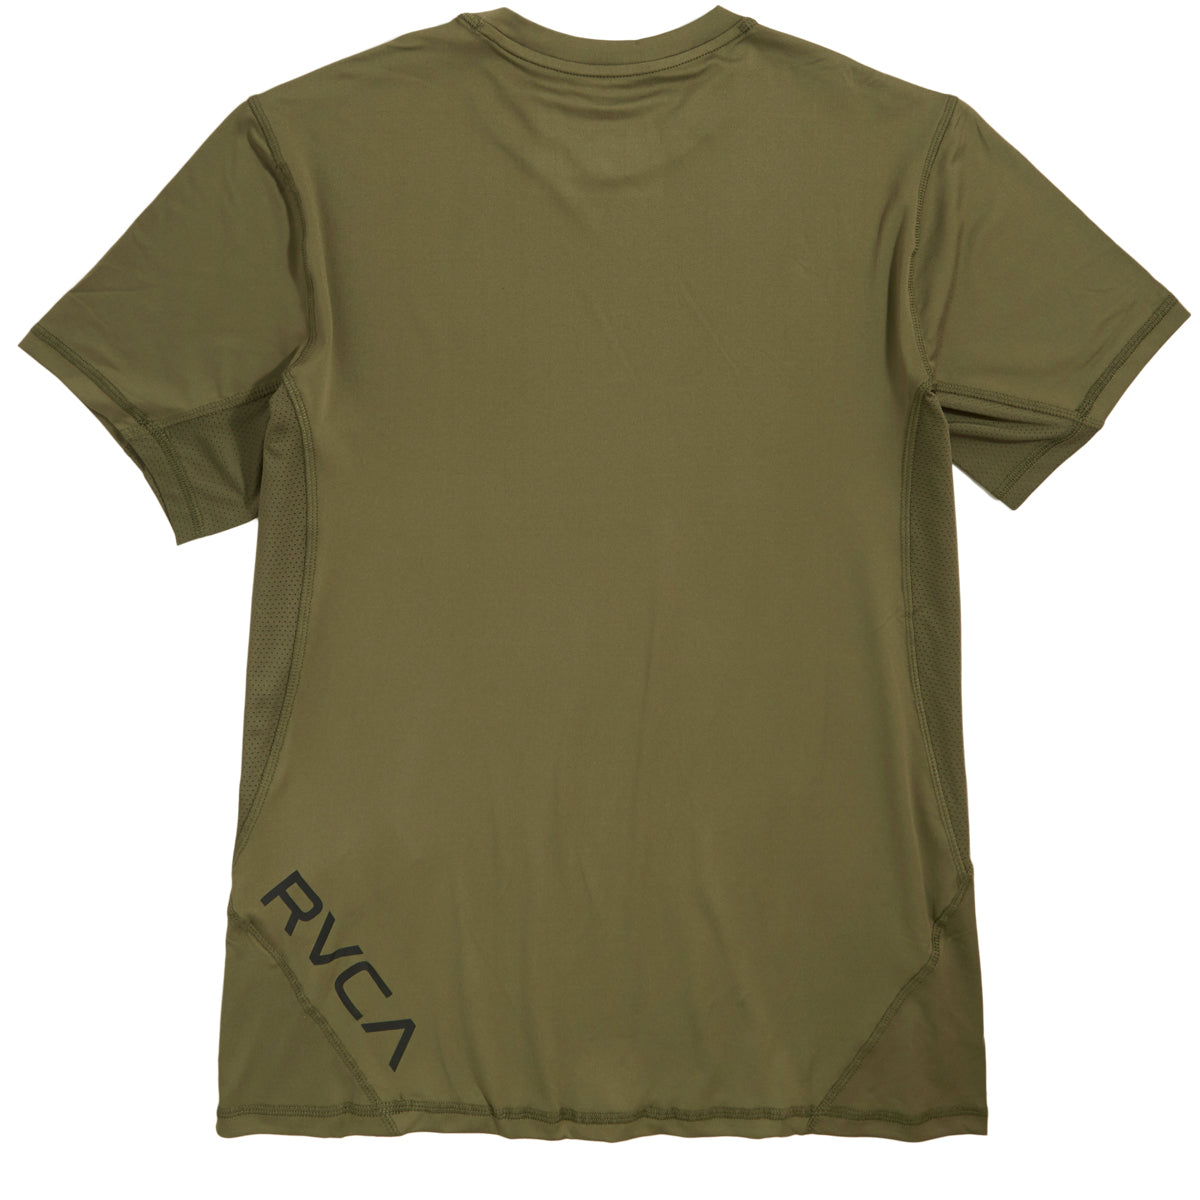 RVCA Sport Vent Shirt - Olive image 2